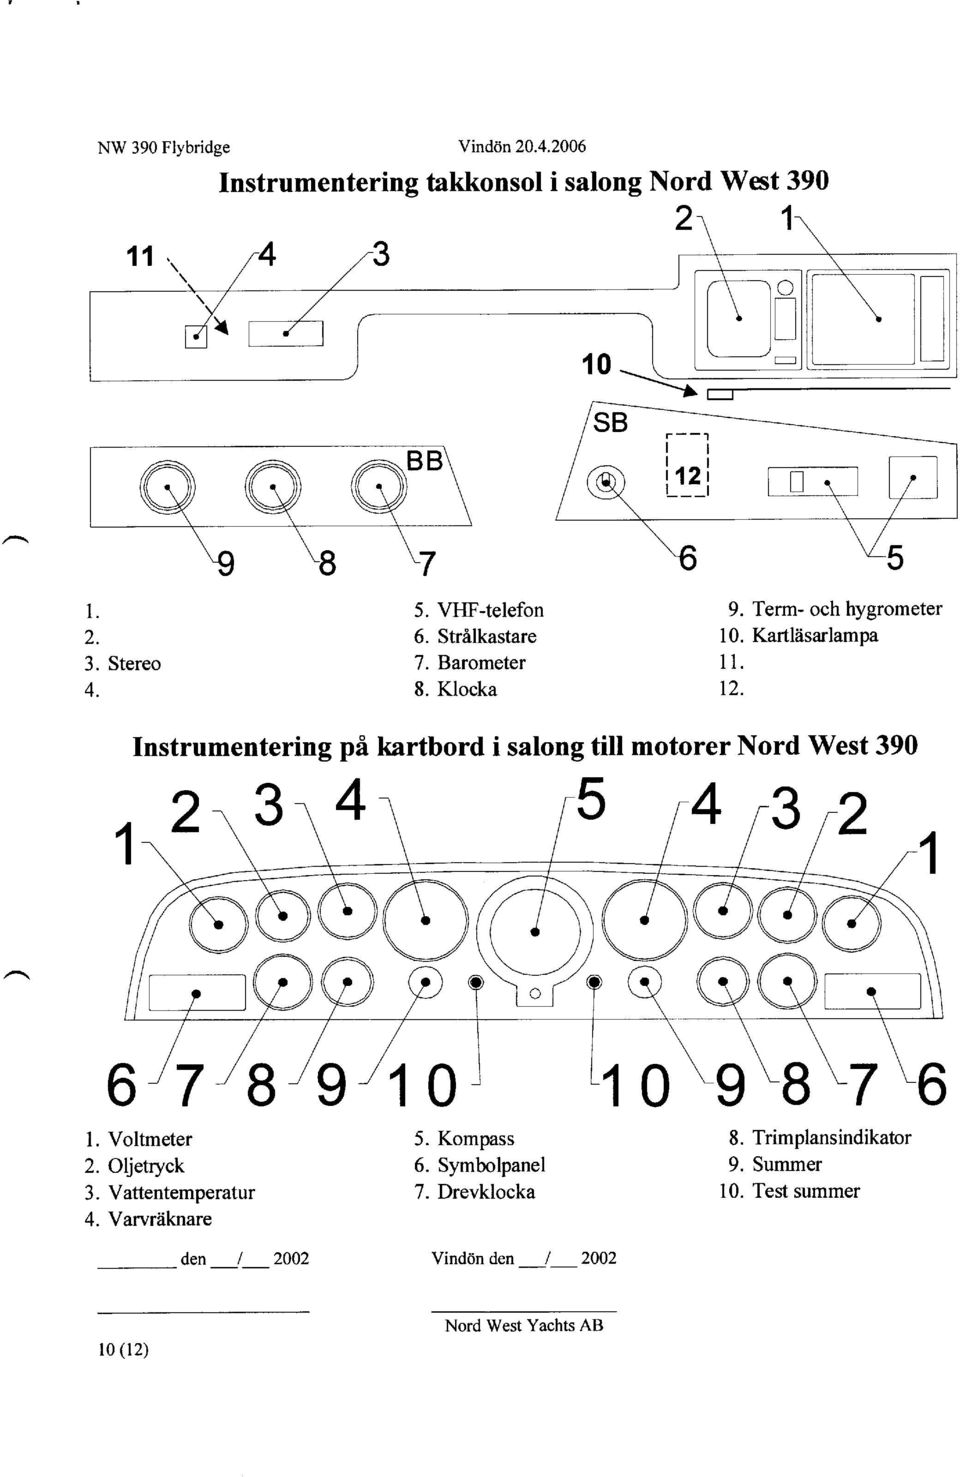 Instrumentering pi kartbord i salong till motorer Nord West 390 2\ 3r 4 5 312 6r7 8 9 10 0 9LBL7 6 1. Voltmeter 2.